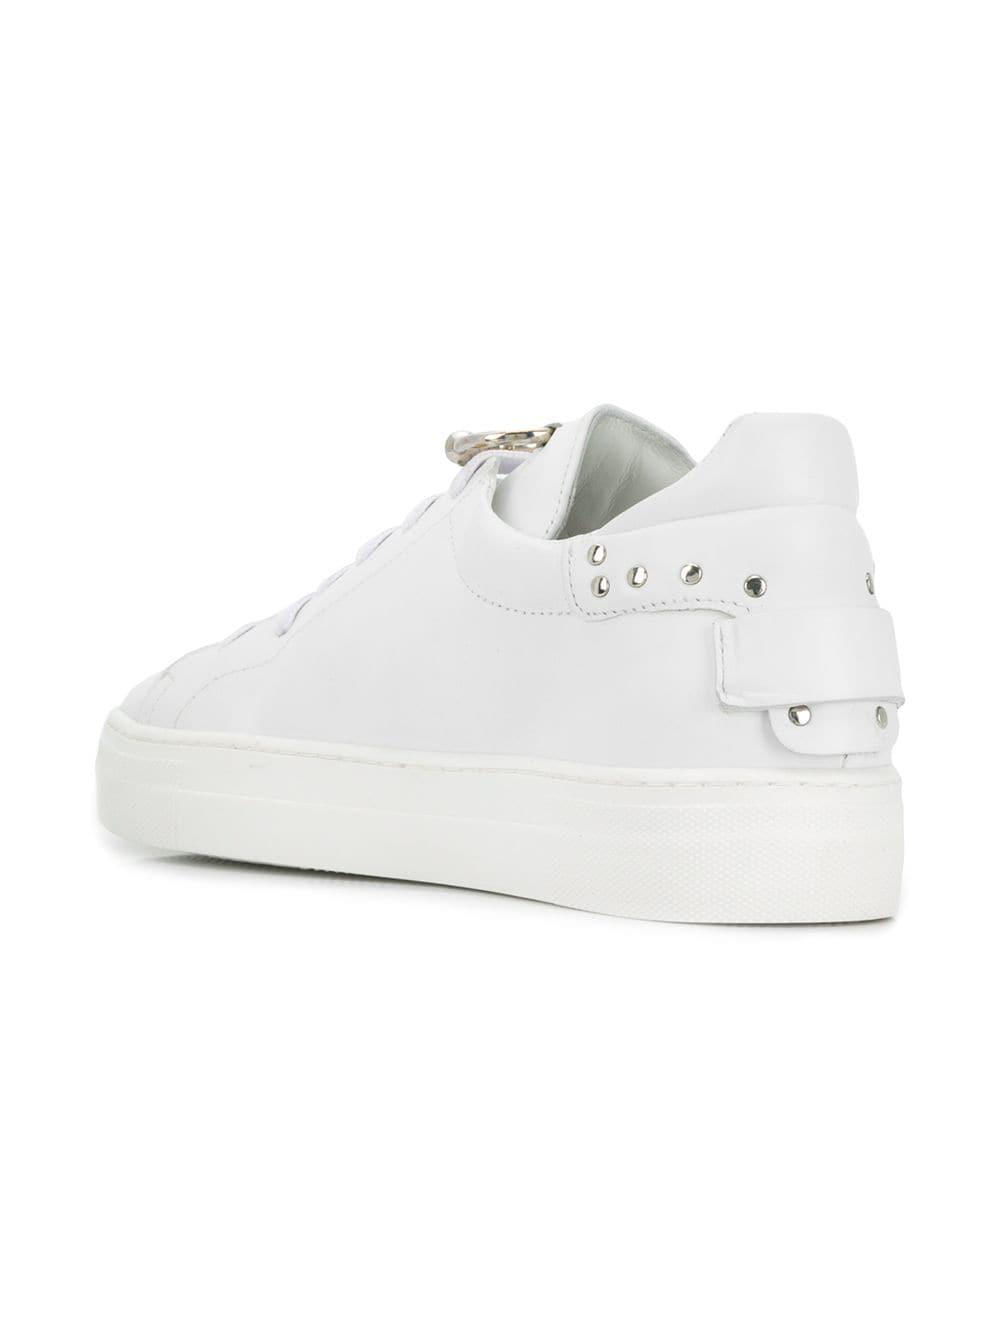 Rebecca Minkoff Cotton Paloma Sneakers in White - Lyst